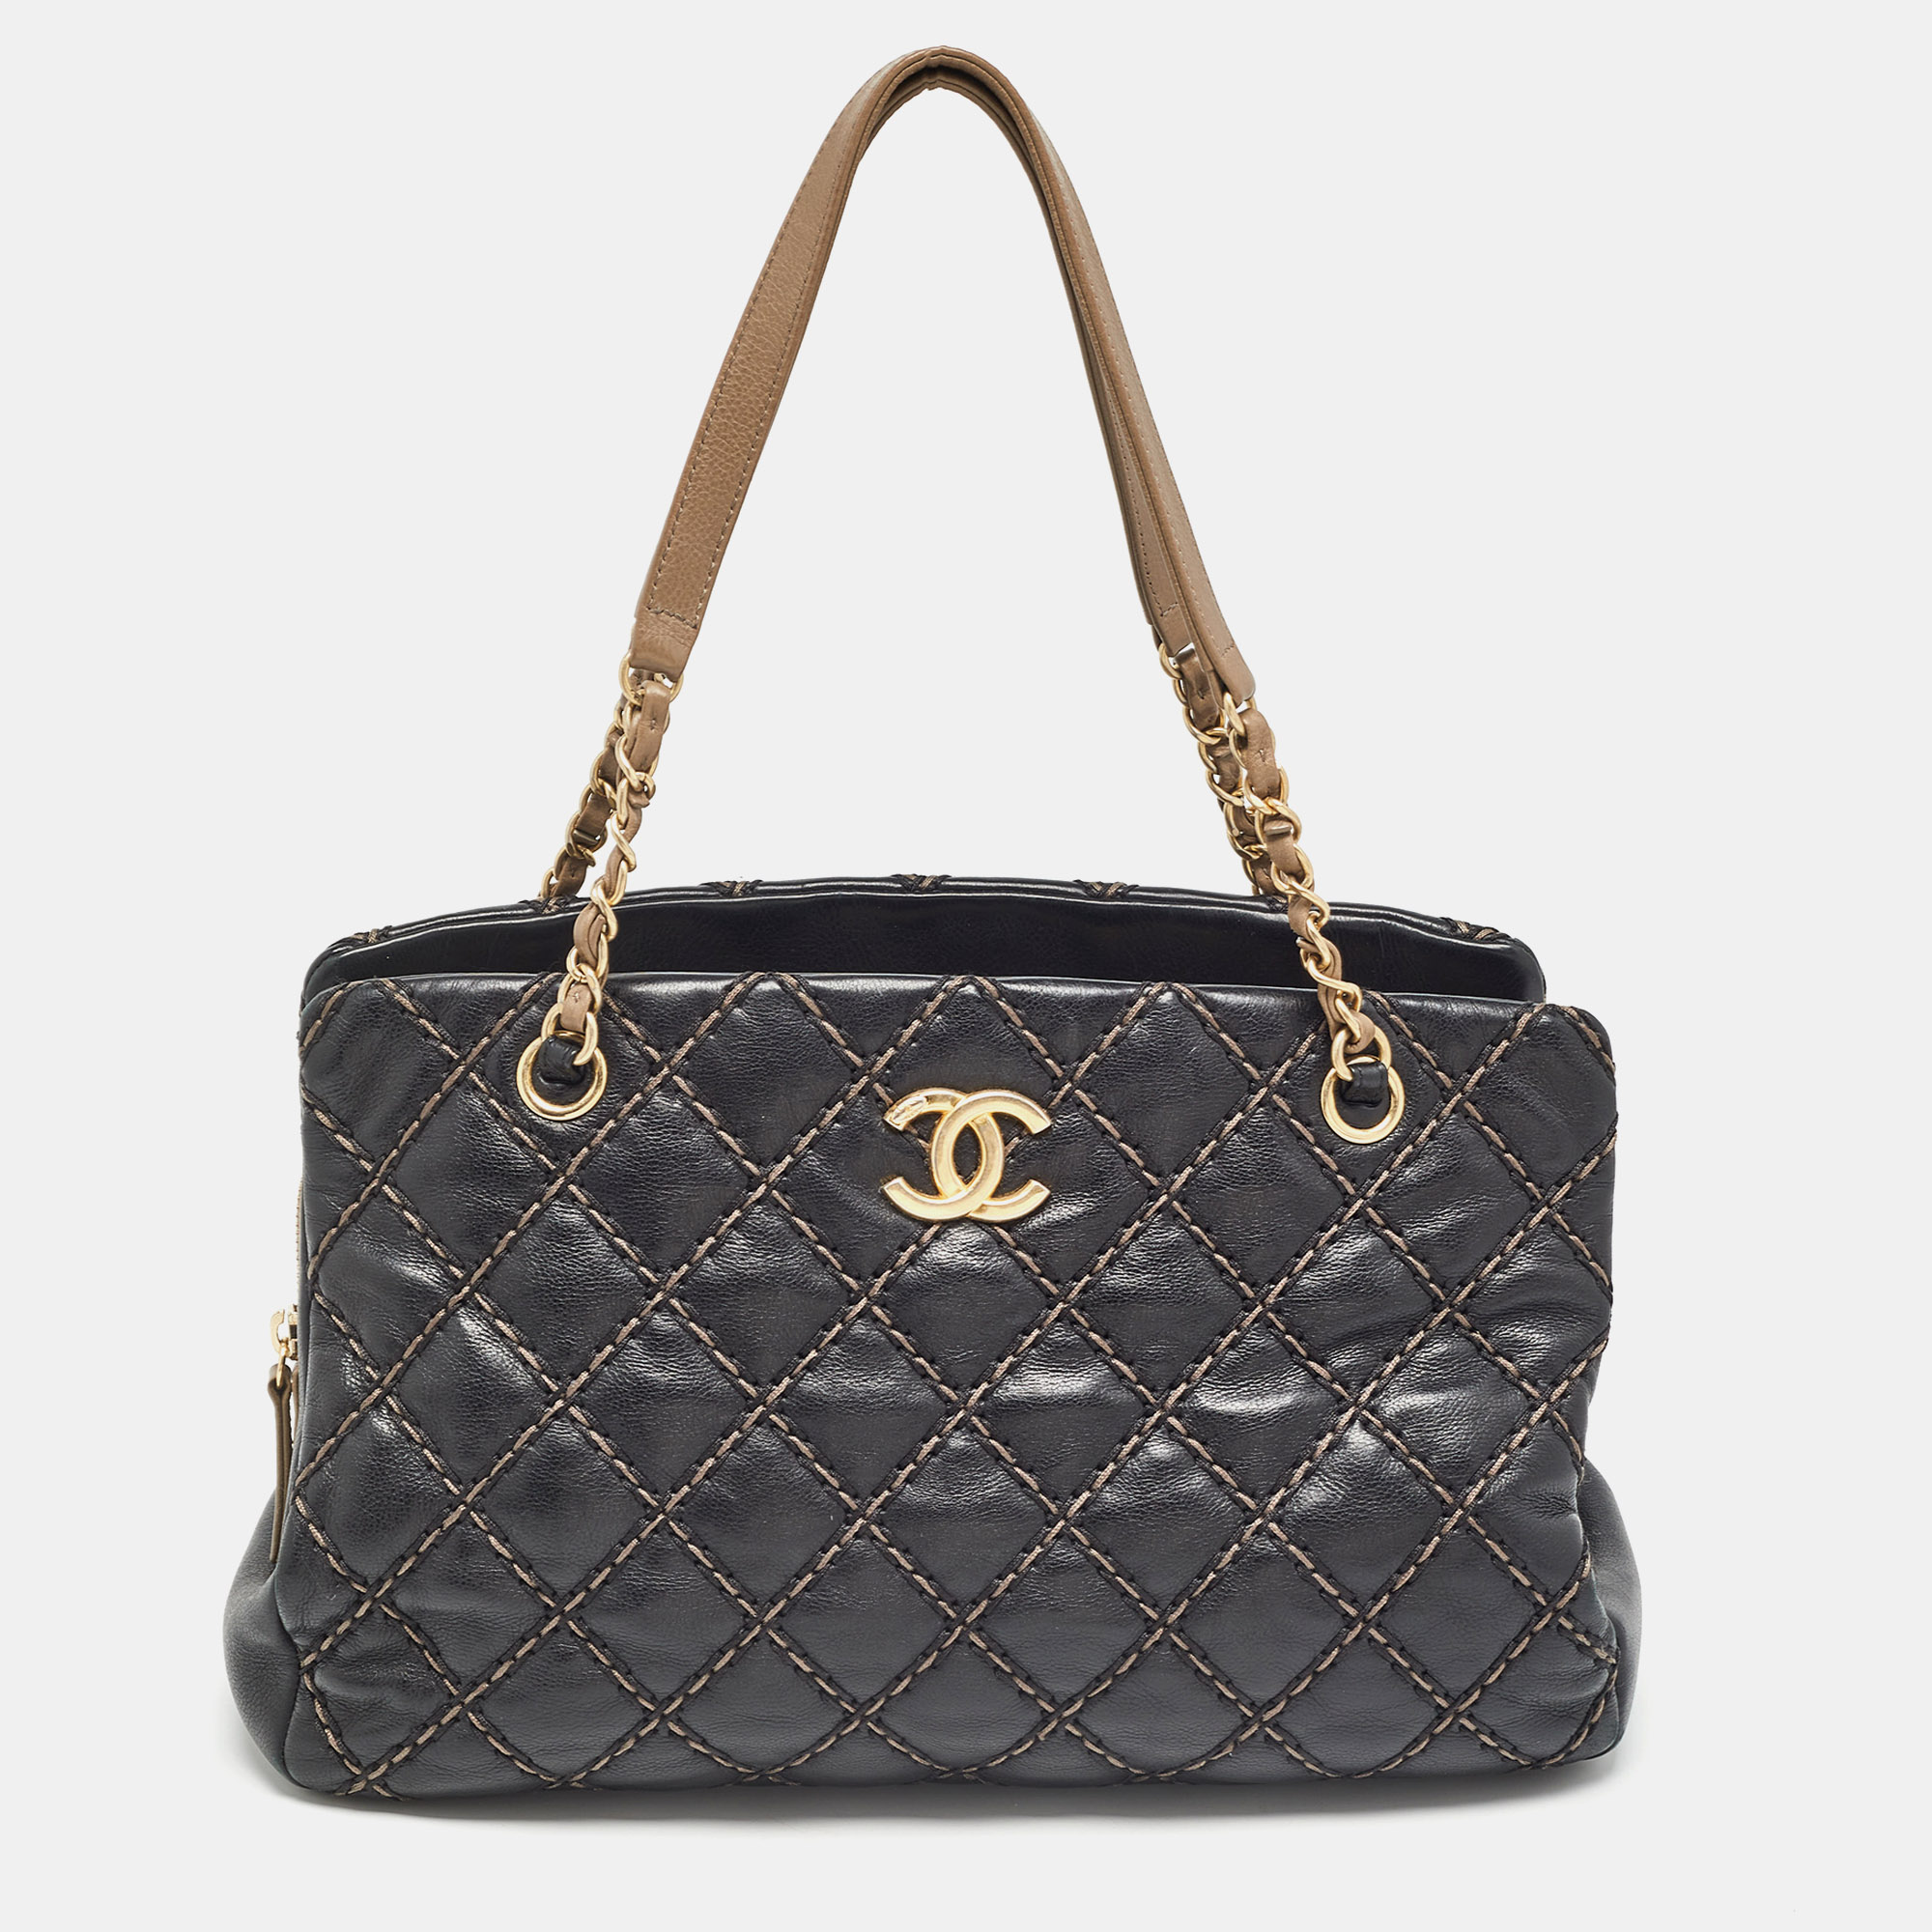 

Chanel Black/Beige Quilted Leather Paris Dallas Chic Stitch Bag